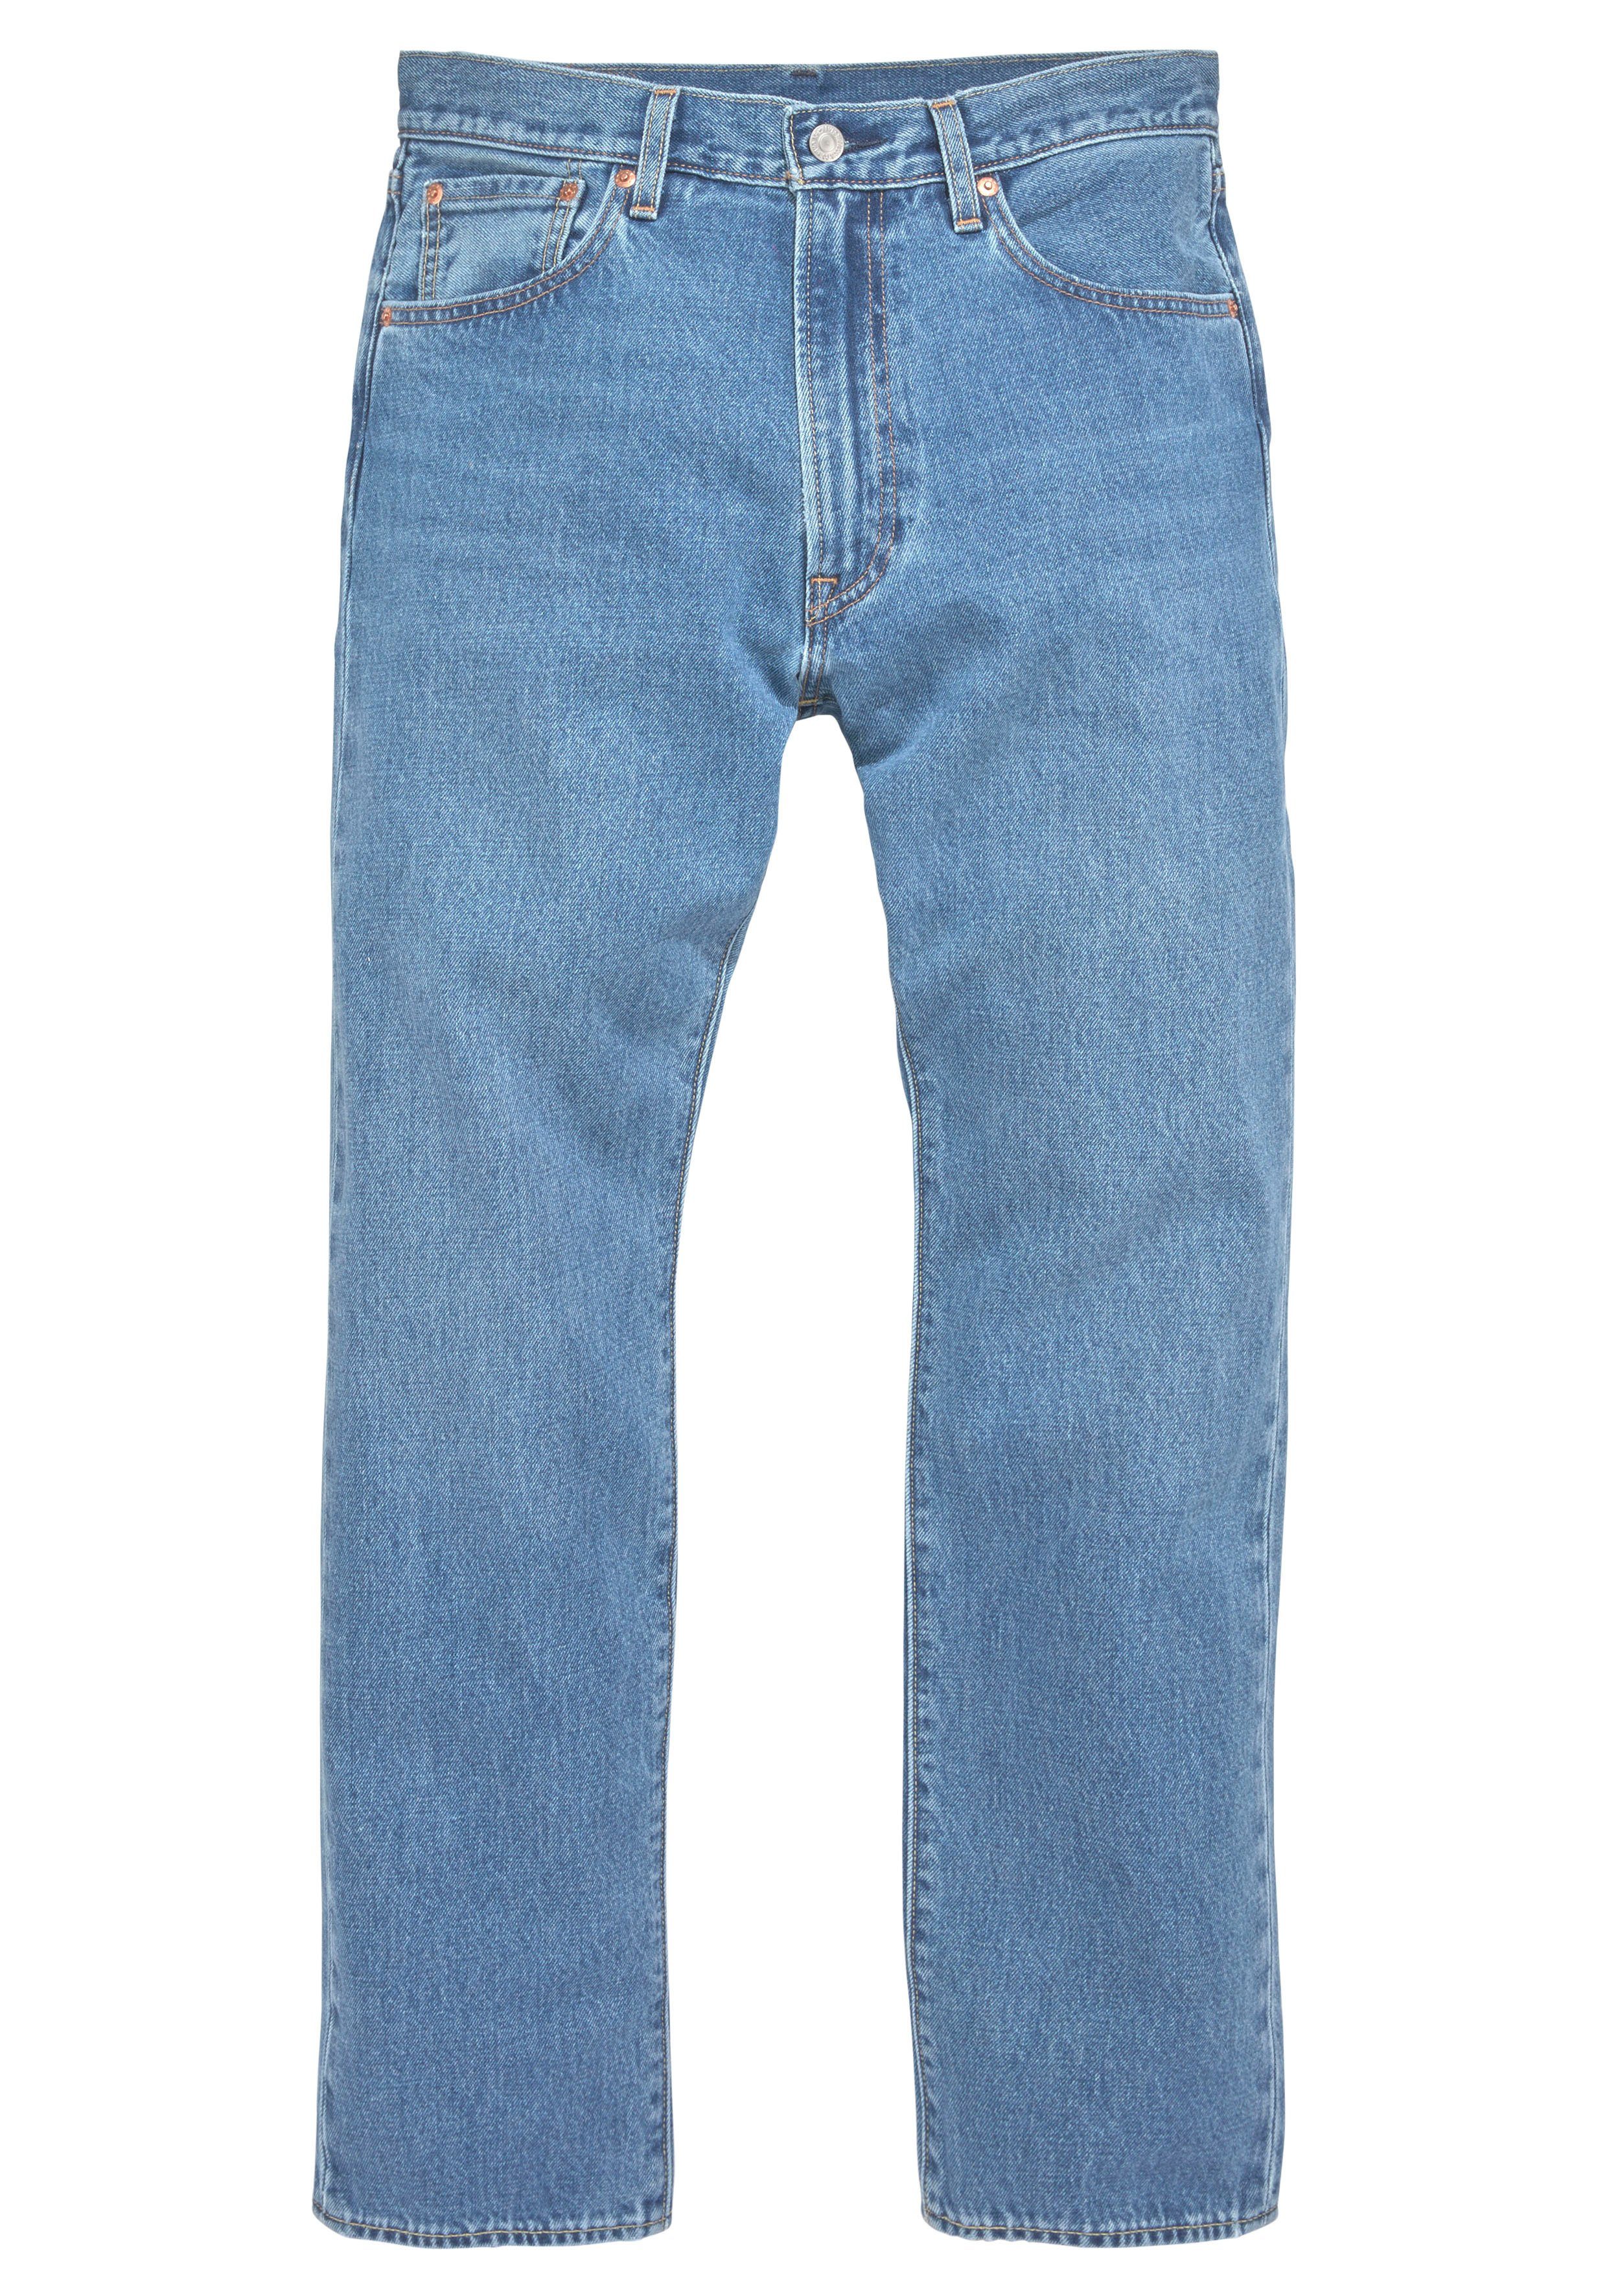 MEDIUM 551Z Straight-Jeans Levi's® Lederbadge mit I Z0873 AUTHENTIC